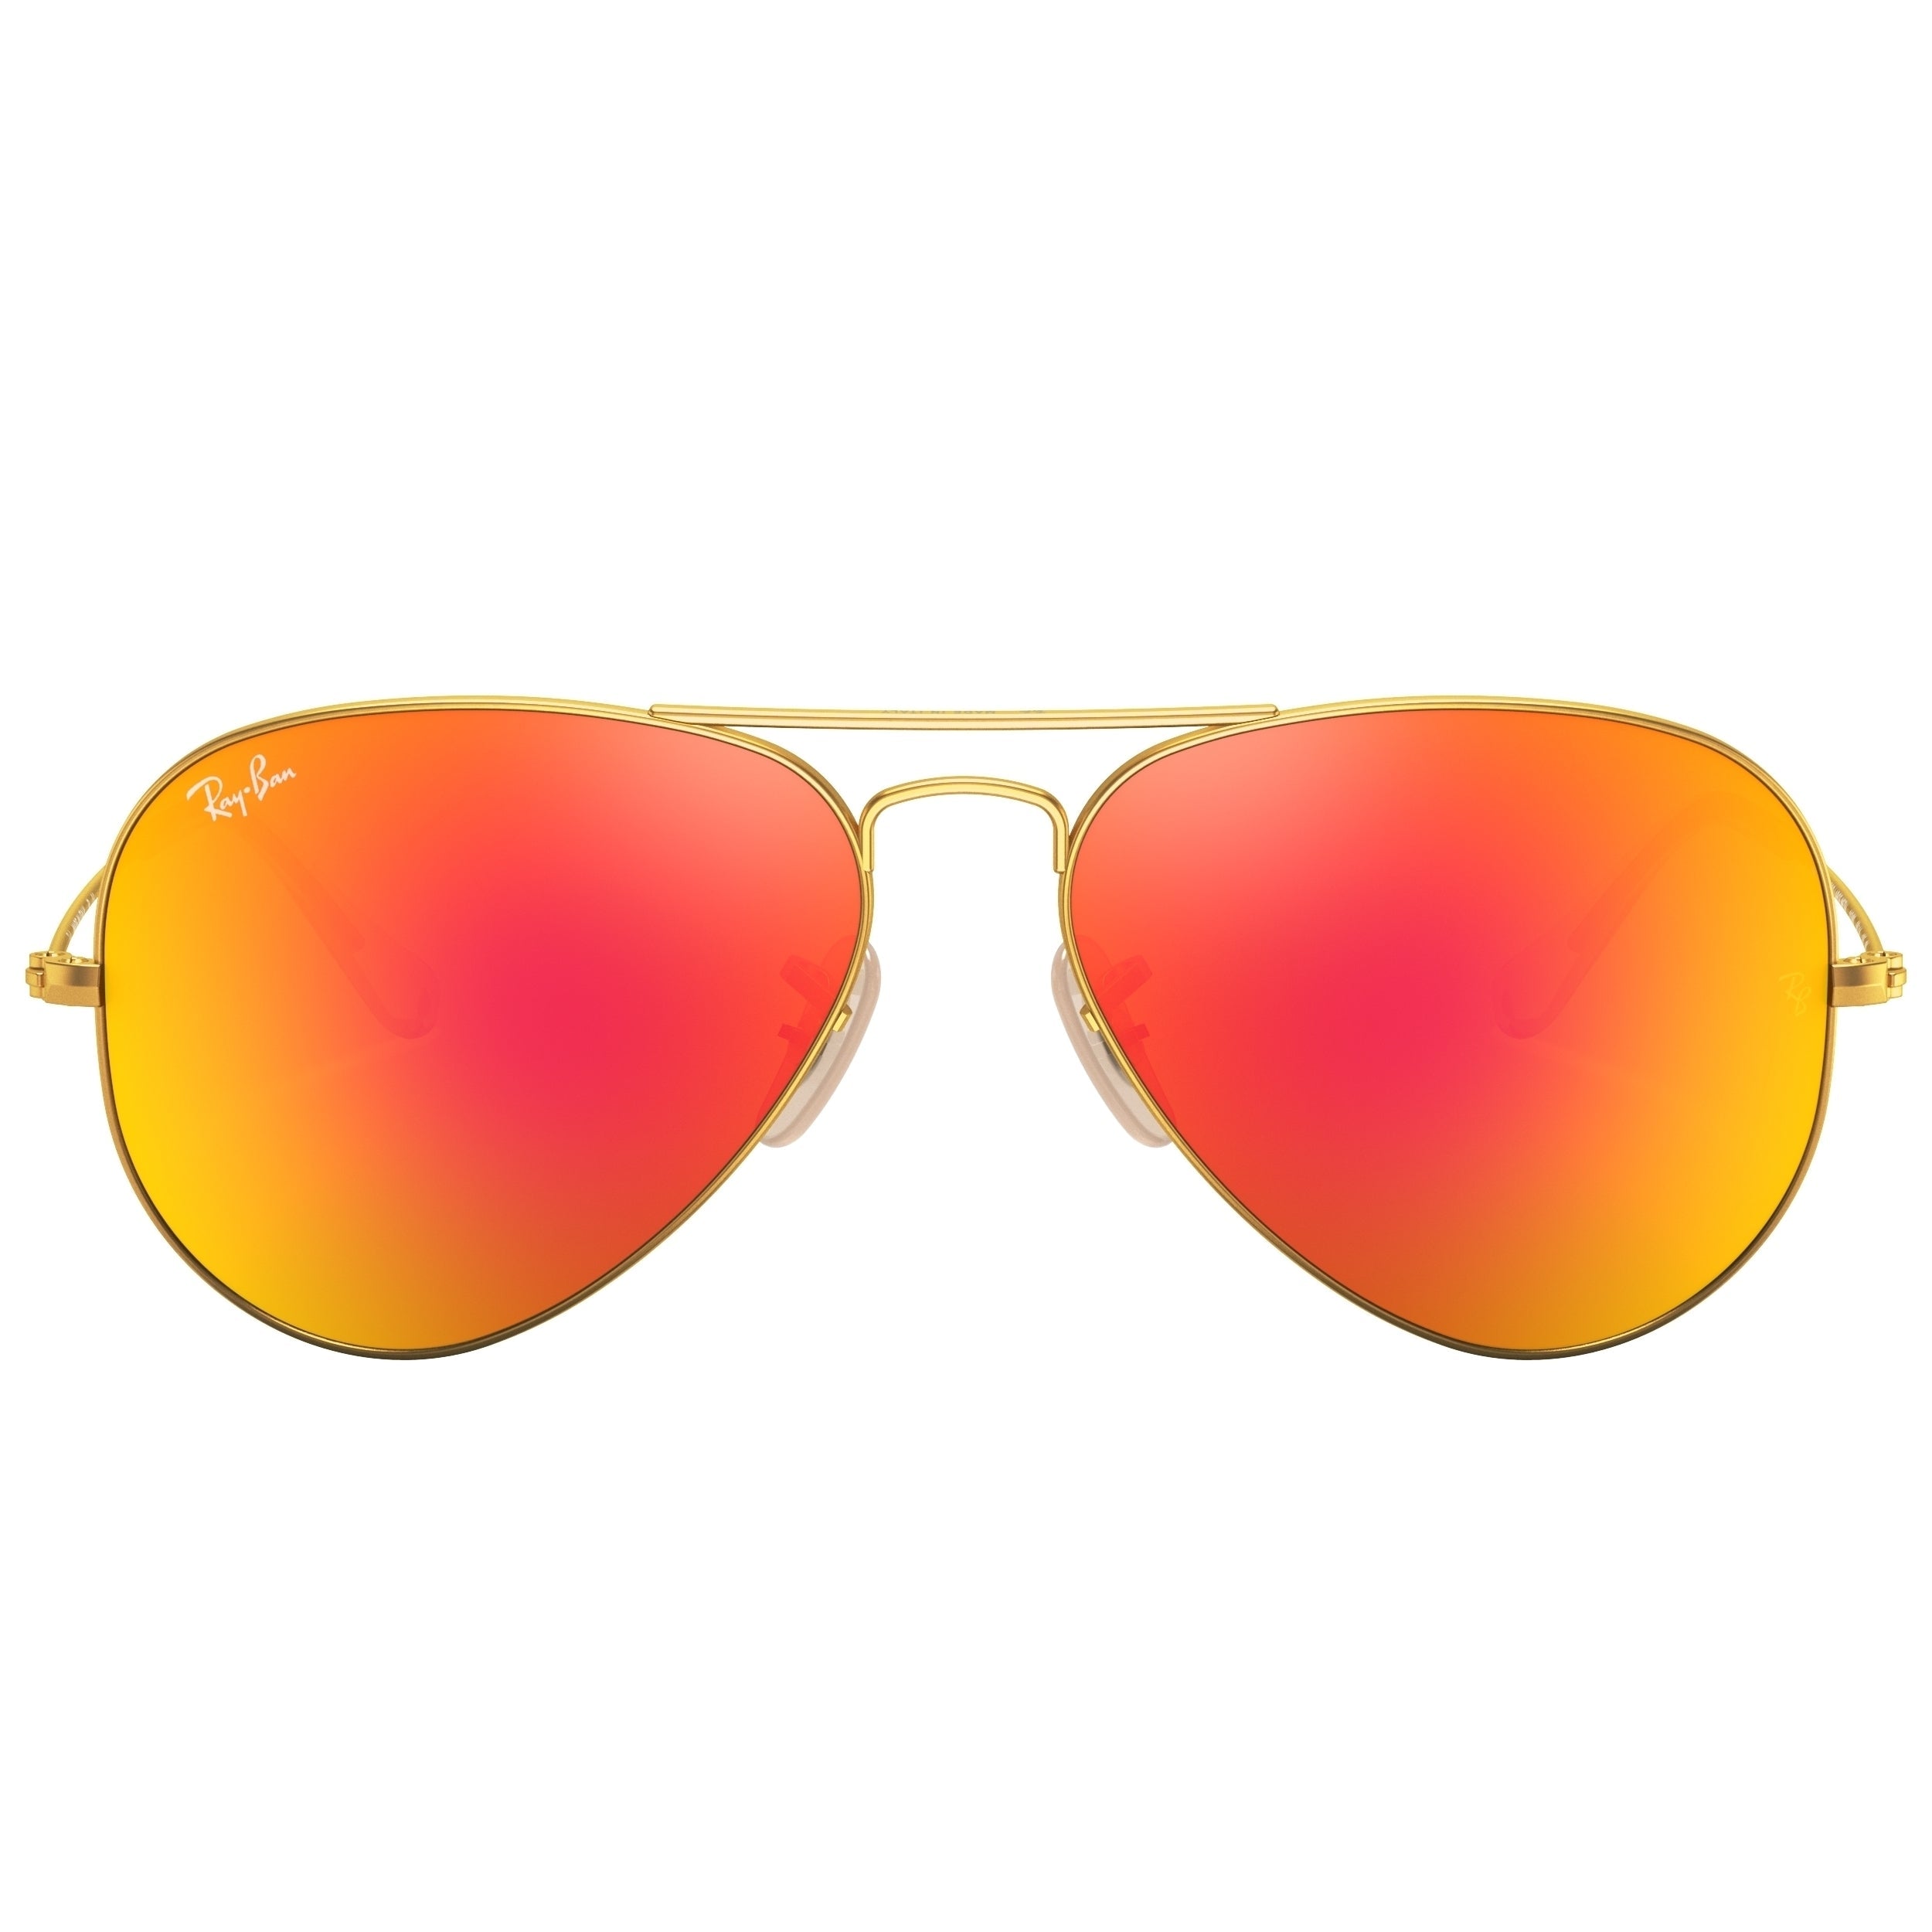 Ray-Ban Aviator Flash Lenses Orange Flash Pilot Unisex Sunglasses RB3025 112/69 55